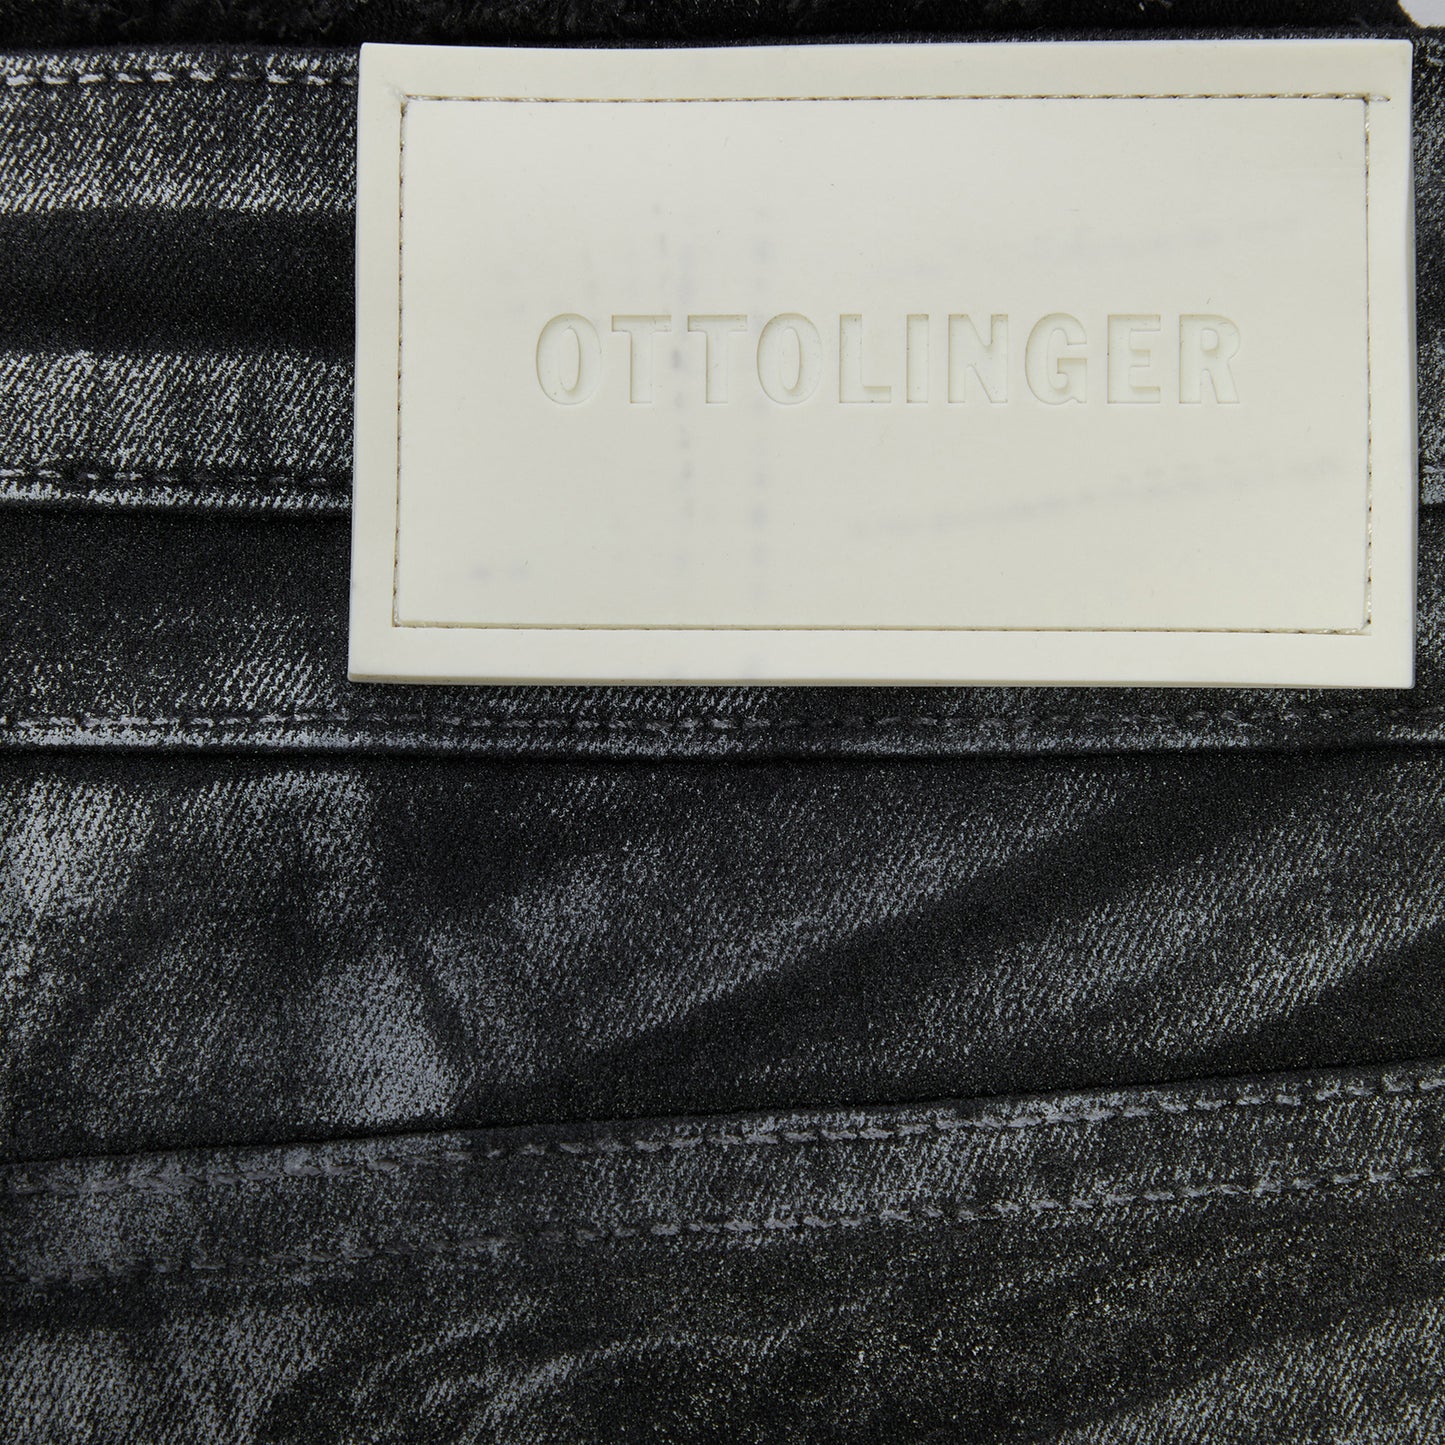 Ottolinger x Tomorrow Double Fold Jeans (Black/White Paint)